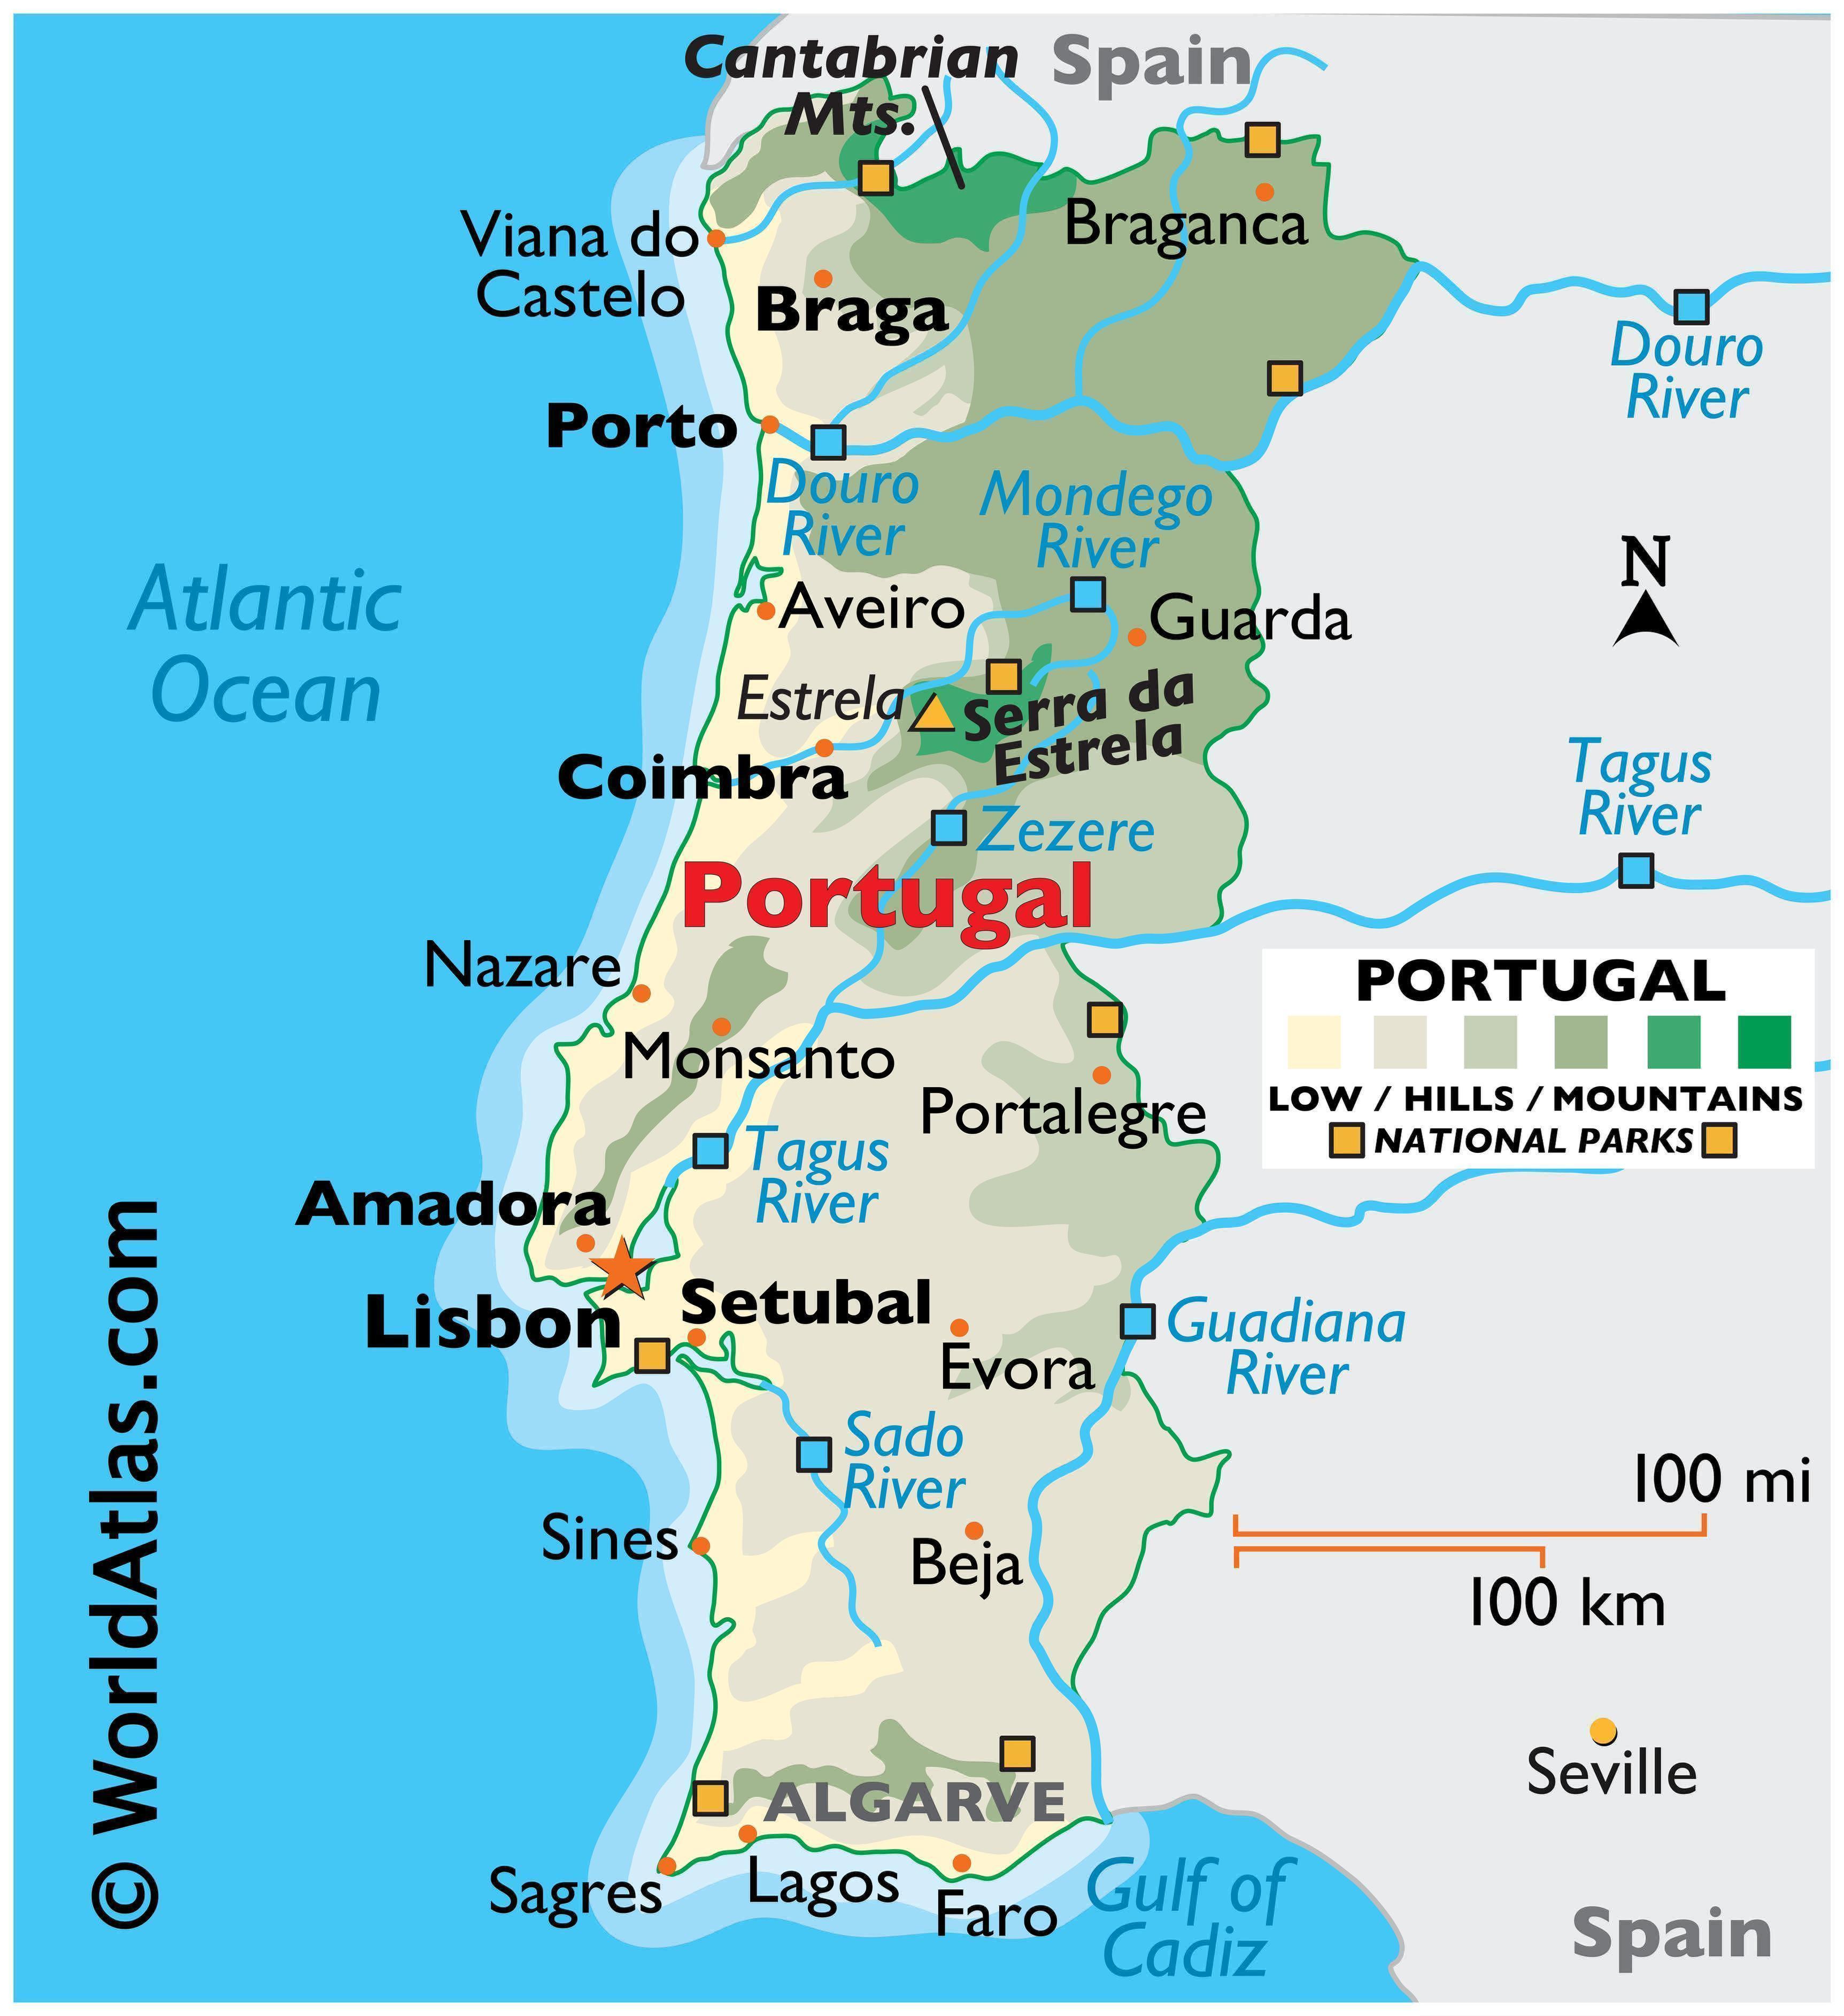 Portugal Facts on Largest Cities, Populations, Symbols - Worldatlas.com